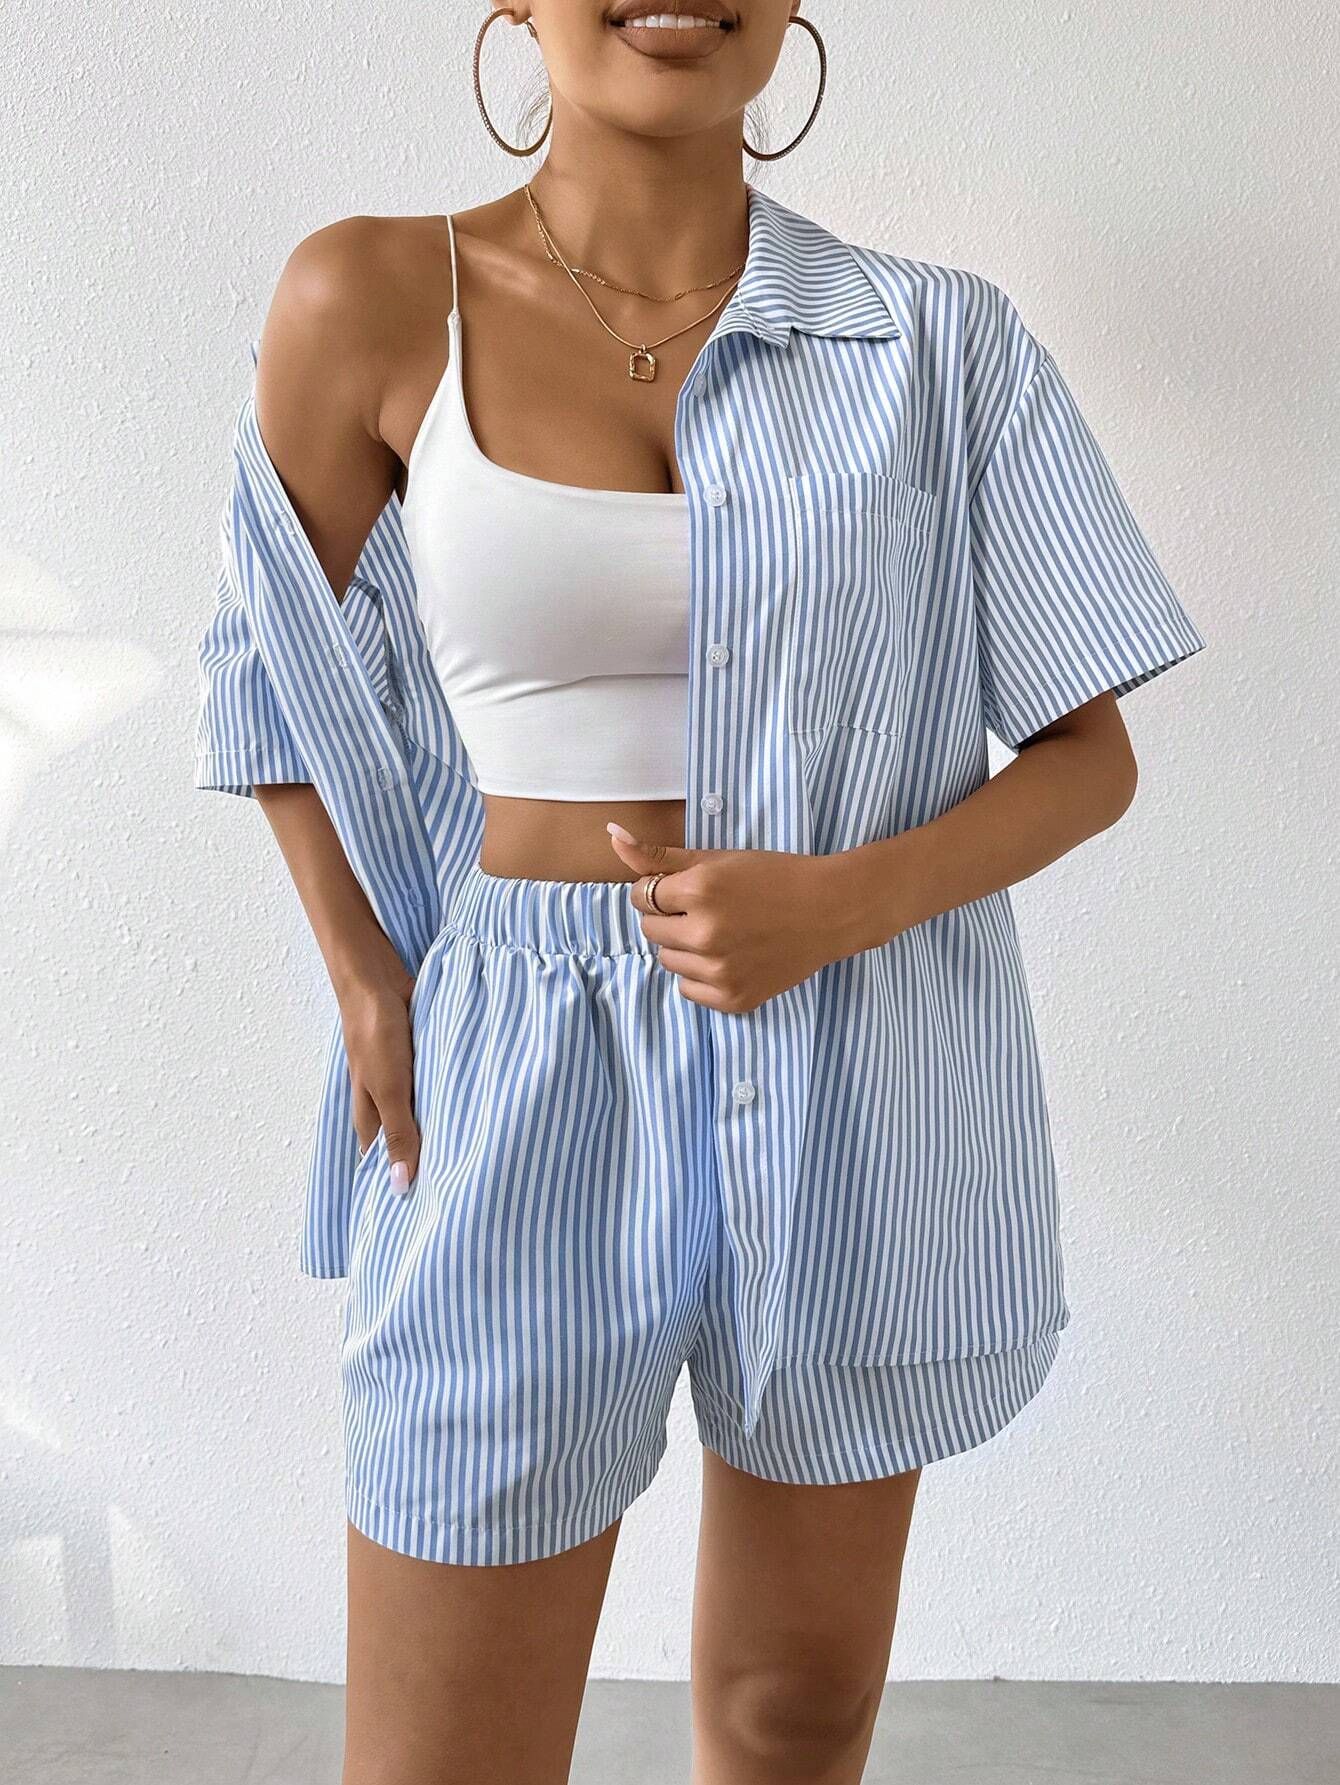 SHEIN Frenchy Women'S Striped Short Sleeve Shirt And Shorts 2pcs/Set | SHEIN